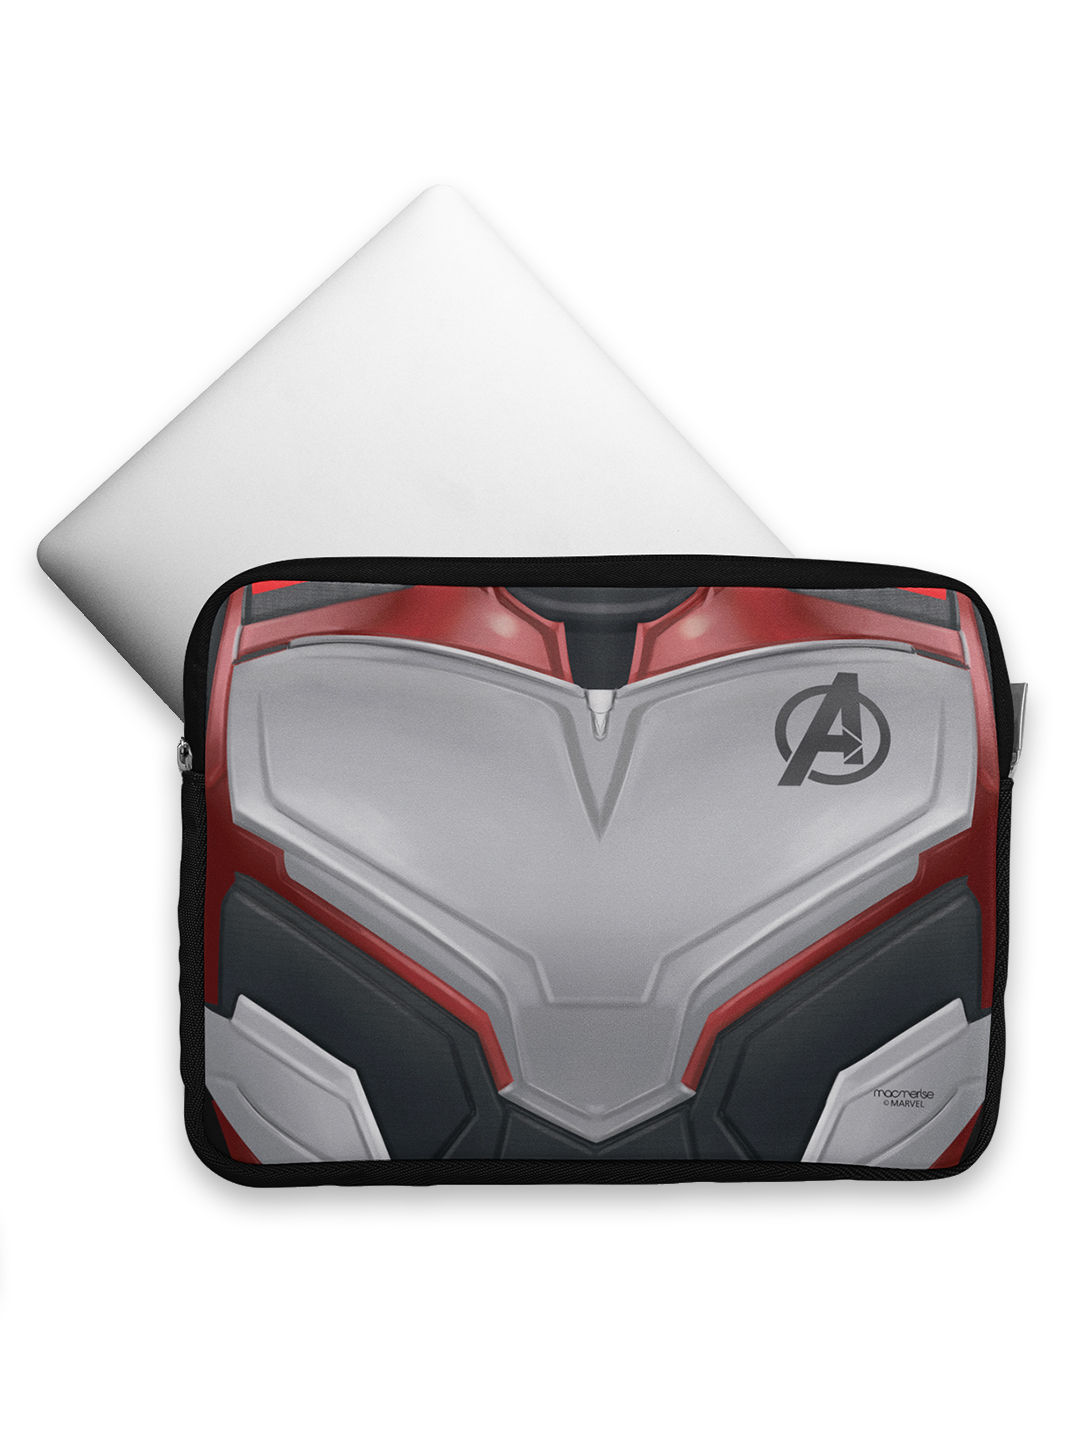 Avengers Endgame Suit - Printed Laptop Sleeves (13 inch)